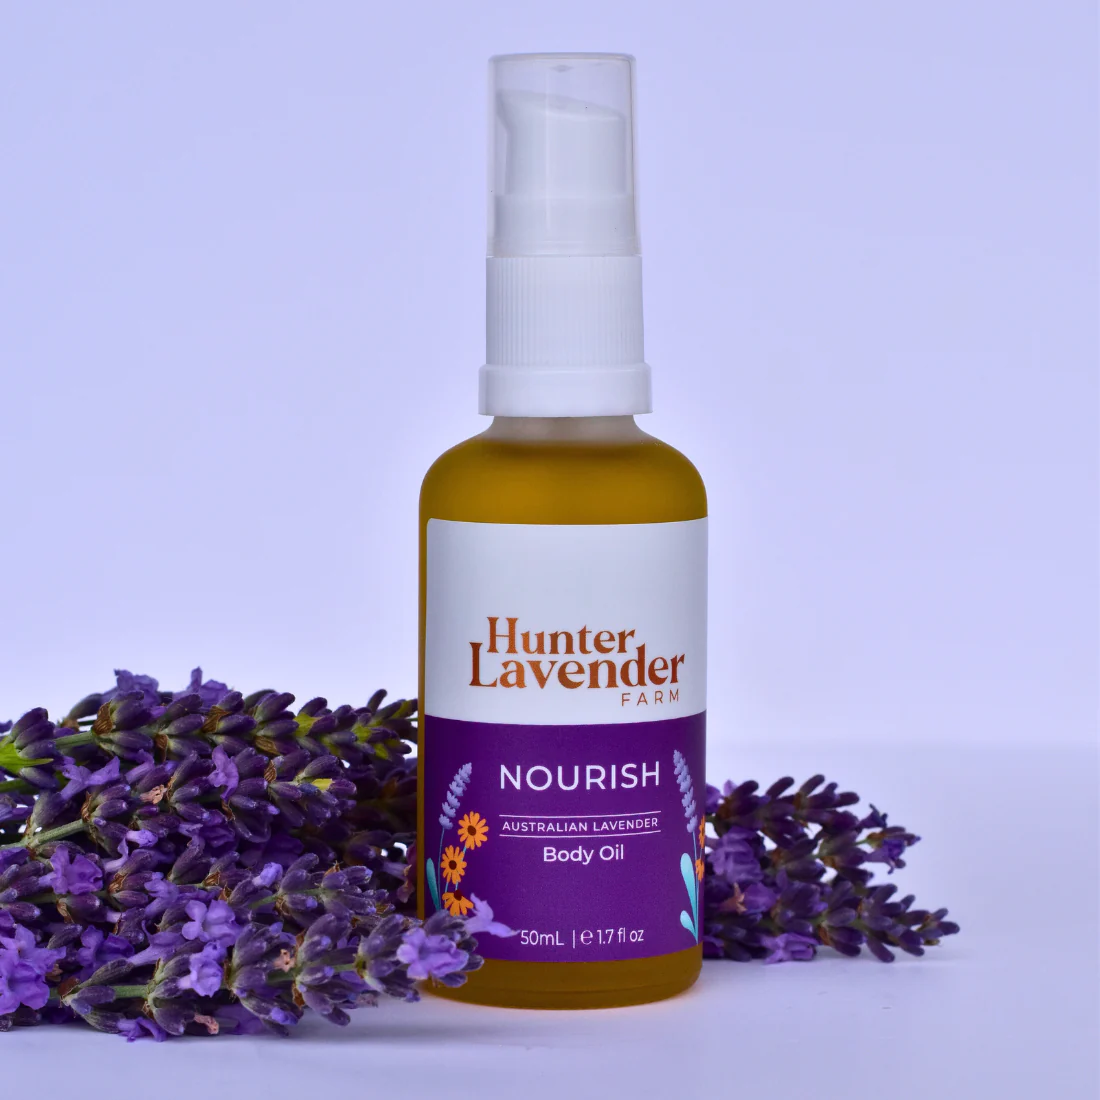 Hunter Lavender Farm